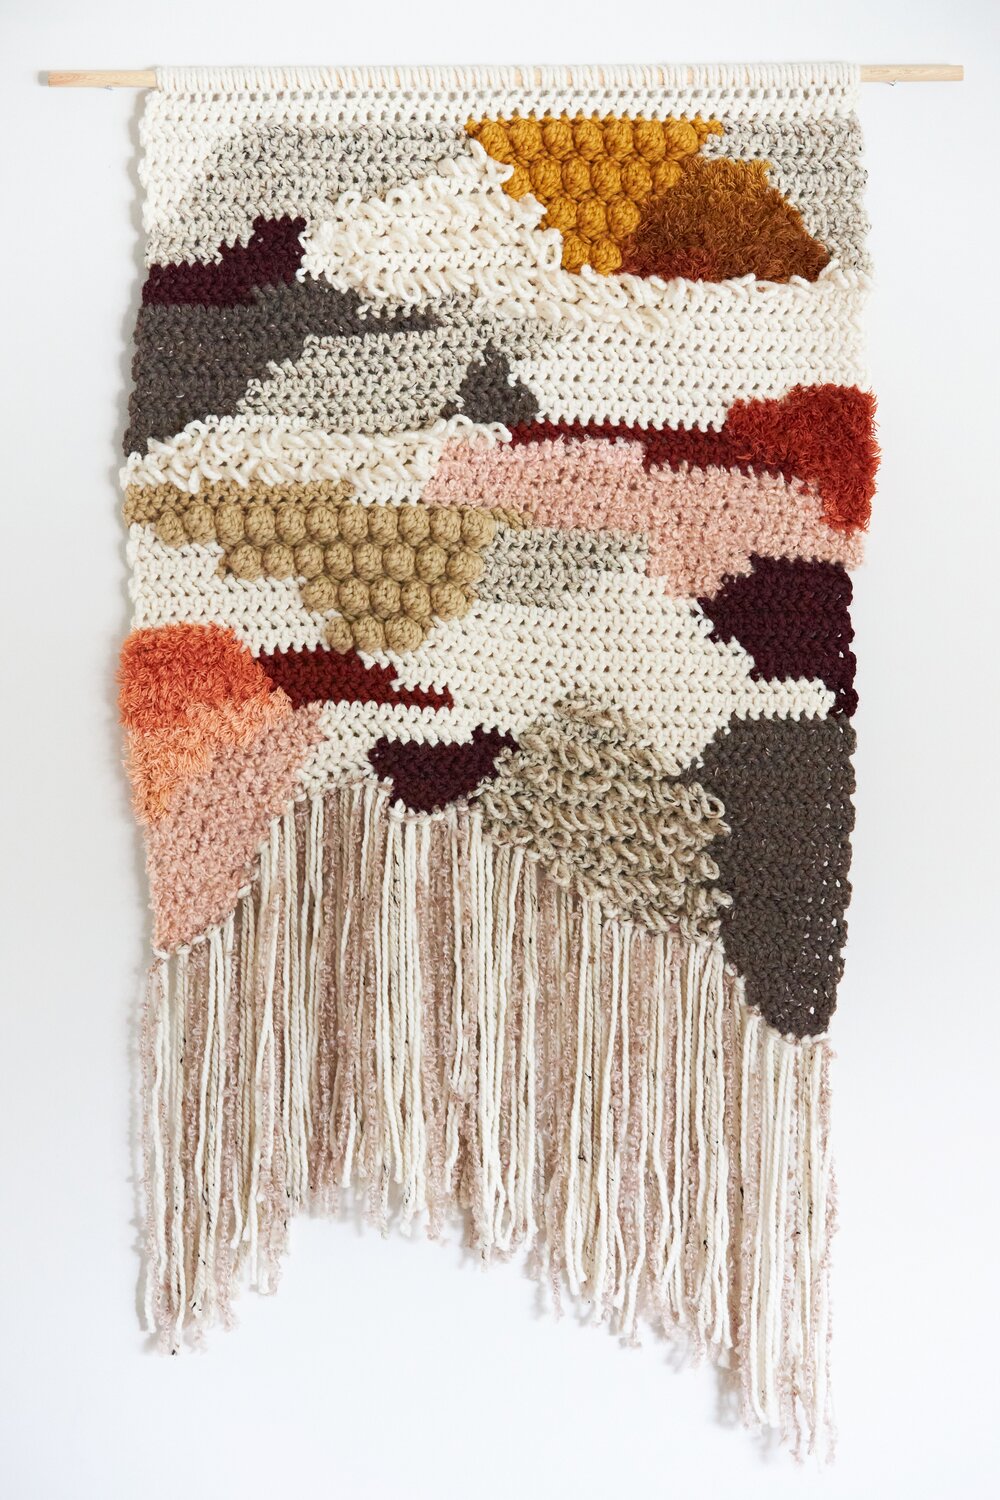 Daybreak Crochet Tapestry pattern by Two of Wands